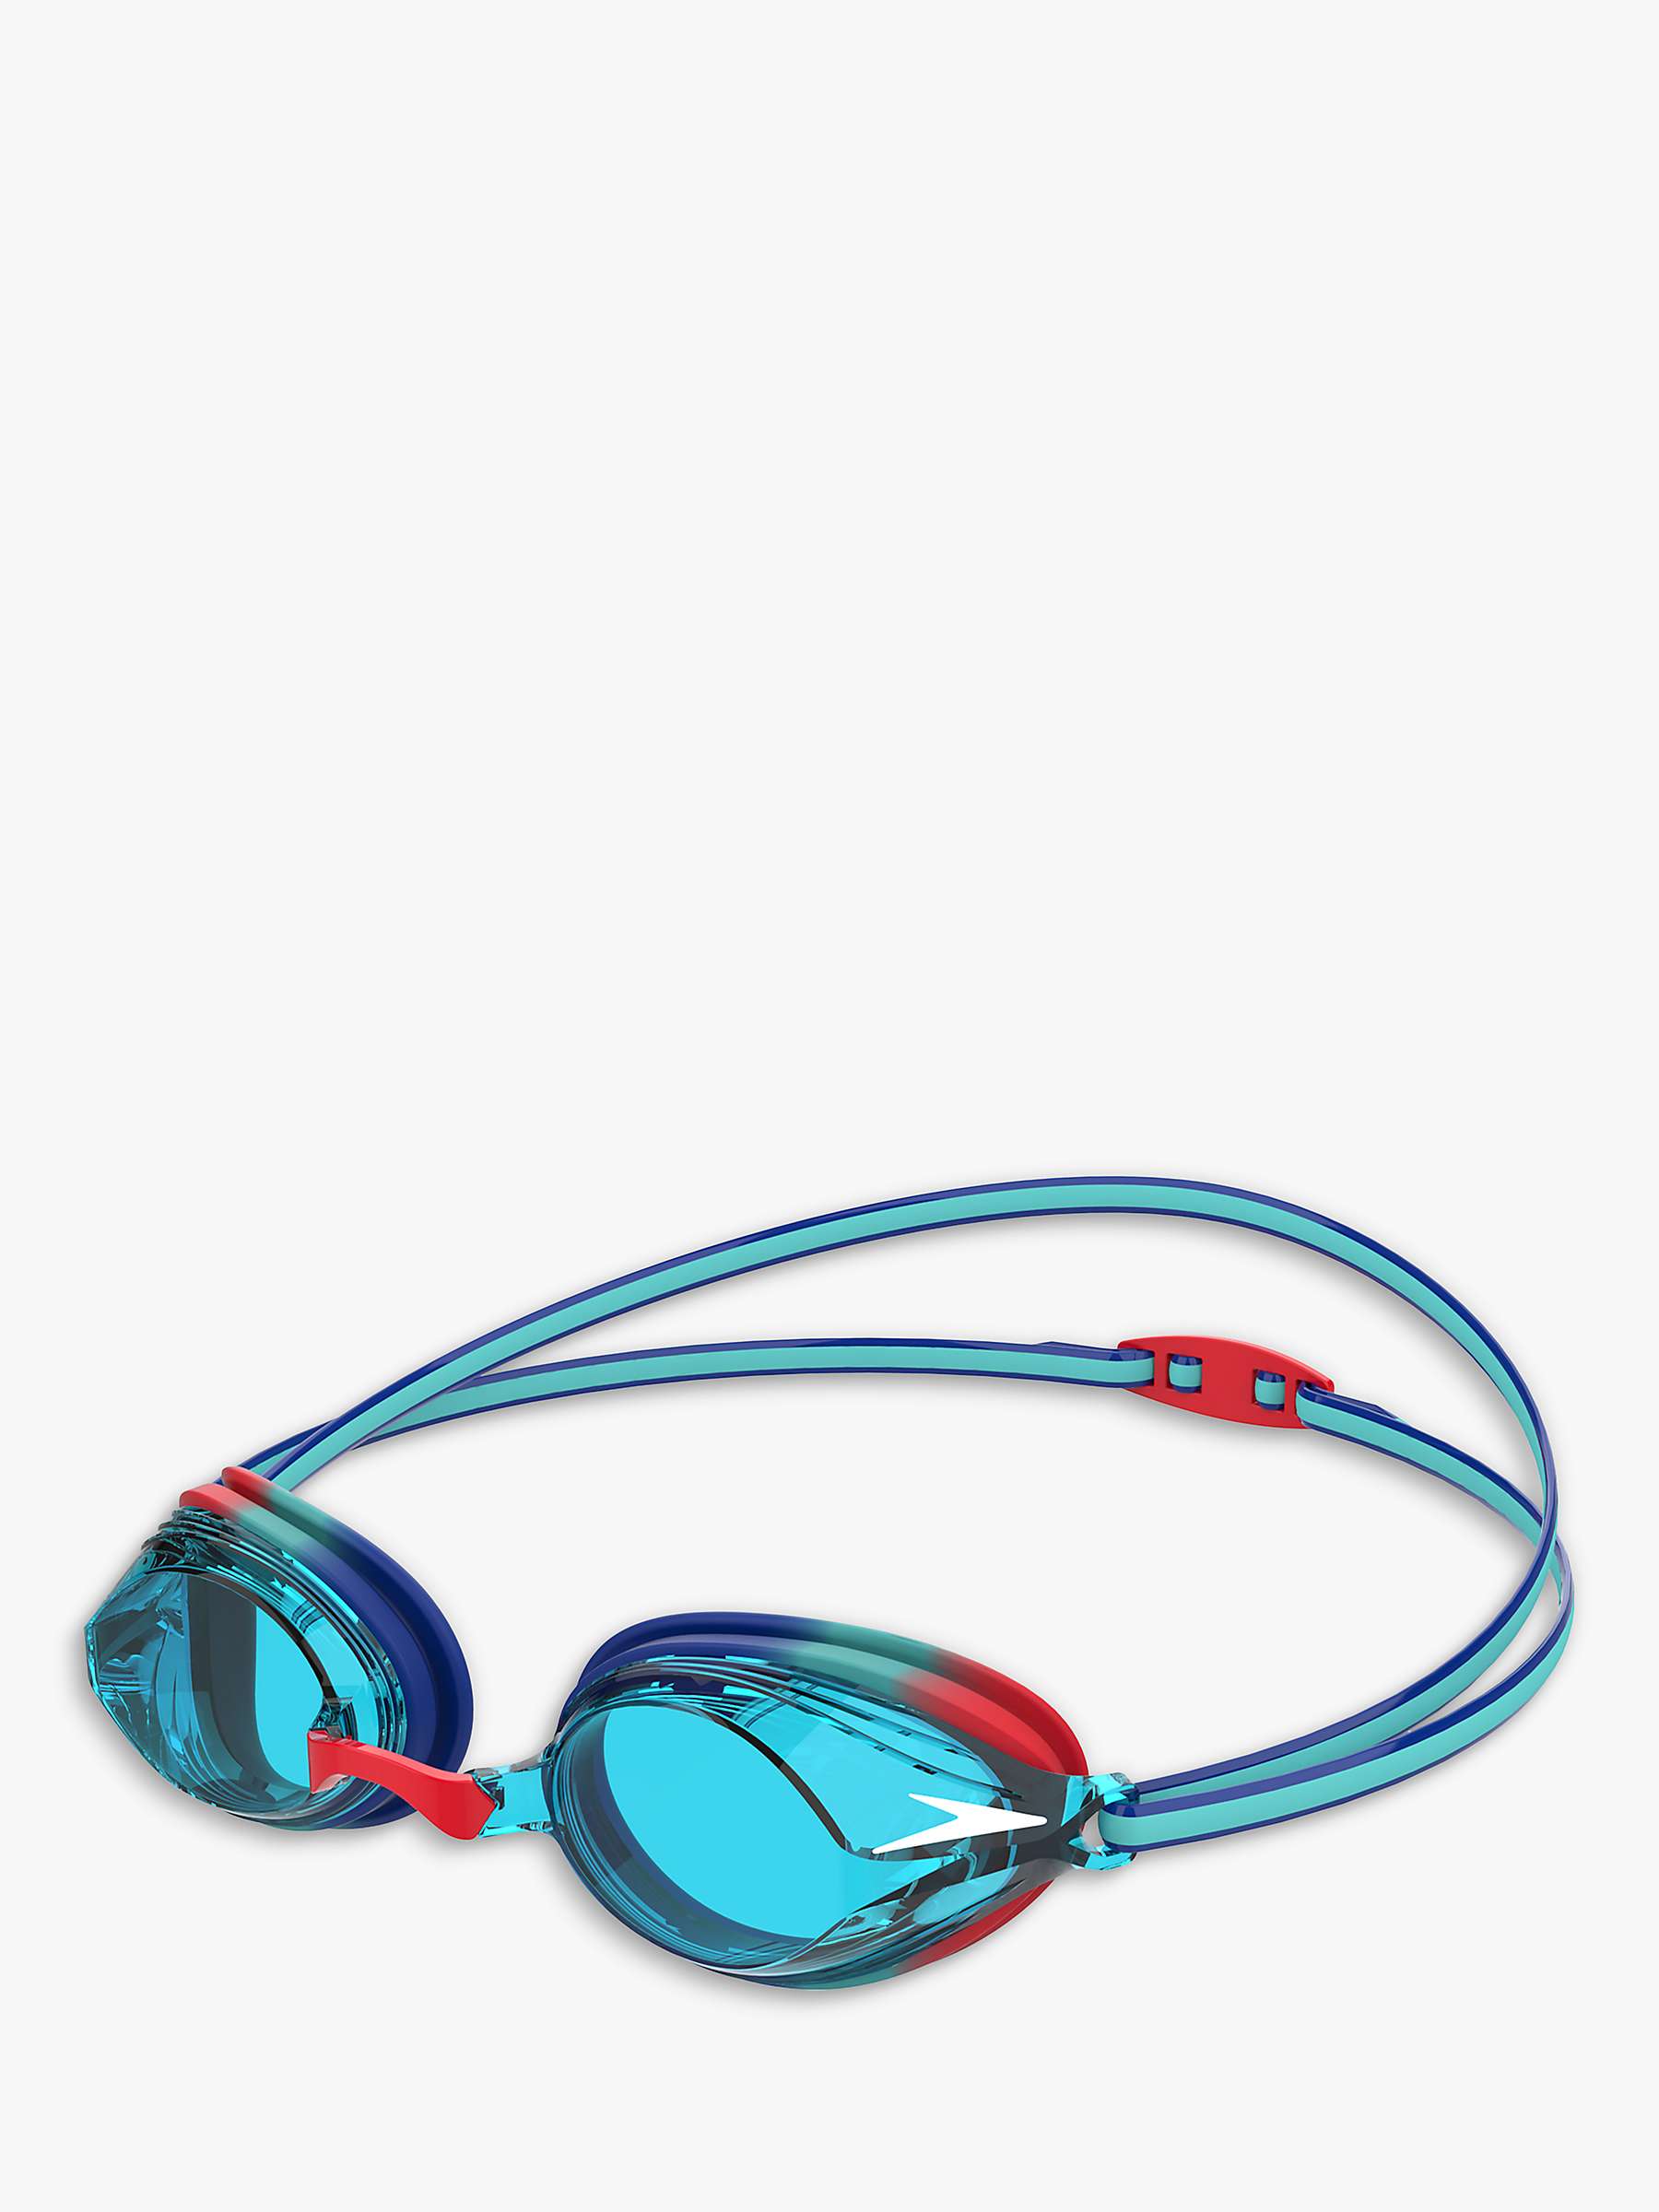 Buy Speedo Vengeance Junior Swimming Goggles, Blue Turquoise Online at johnlewis.com